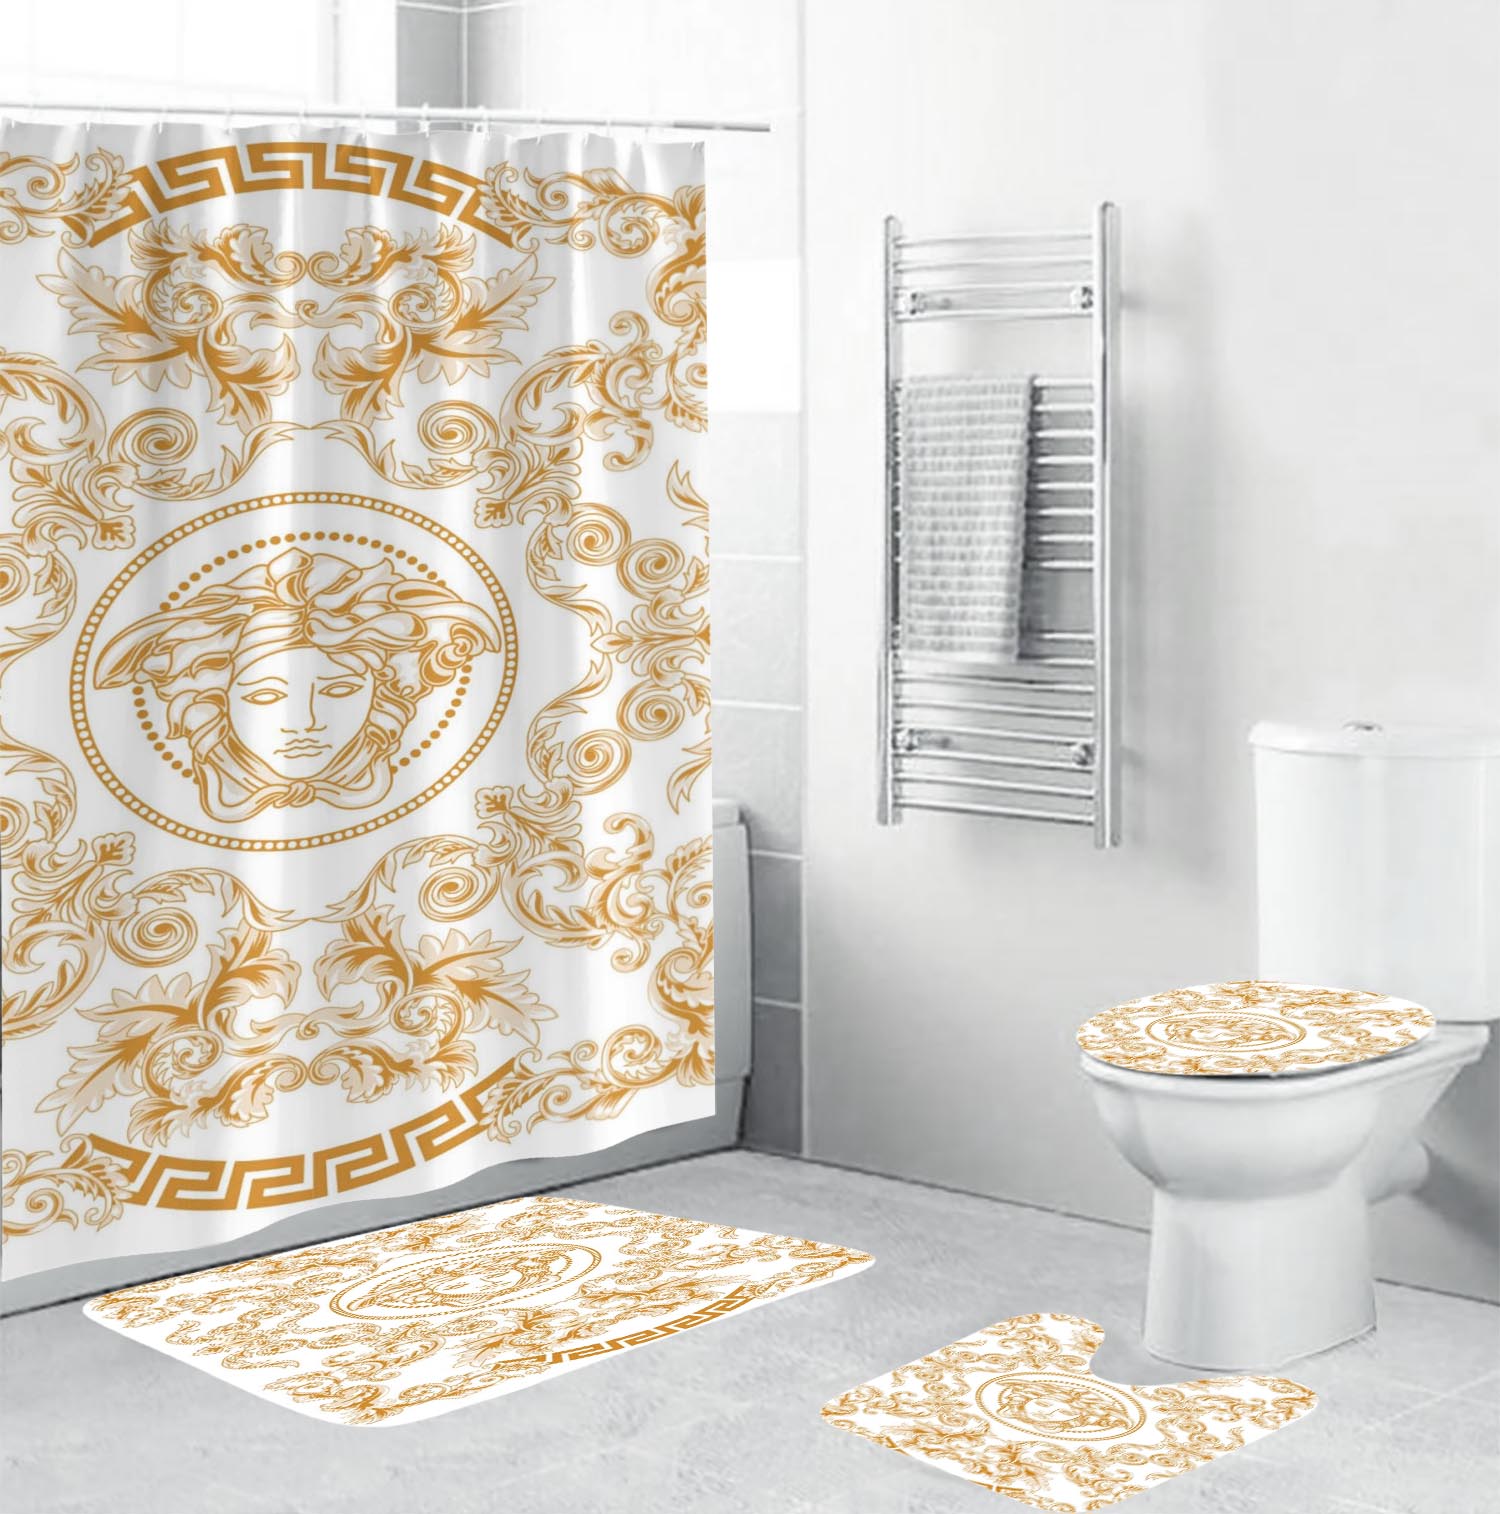 Gianni Versace Bathroom Set Hypebeast Bath Mat Luxury Fashion Brand Home Decor